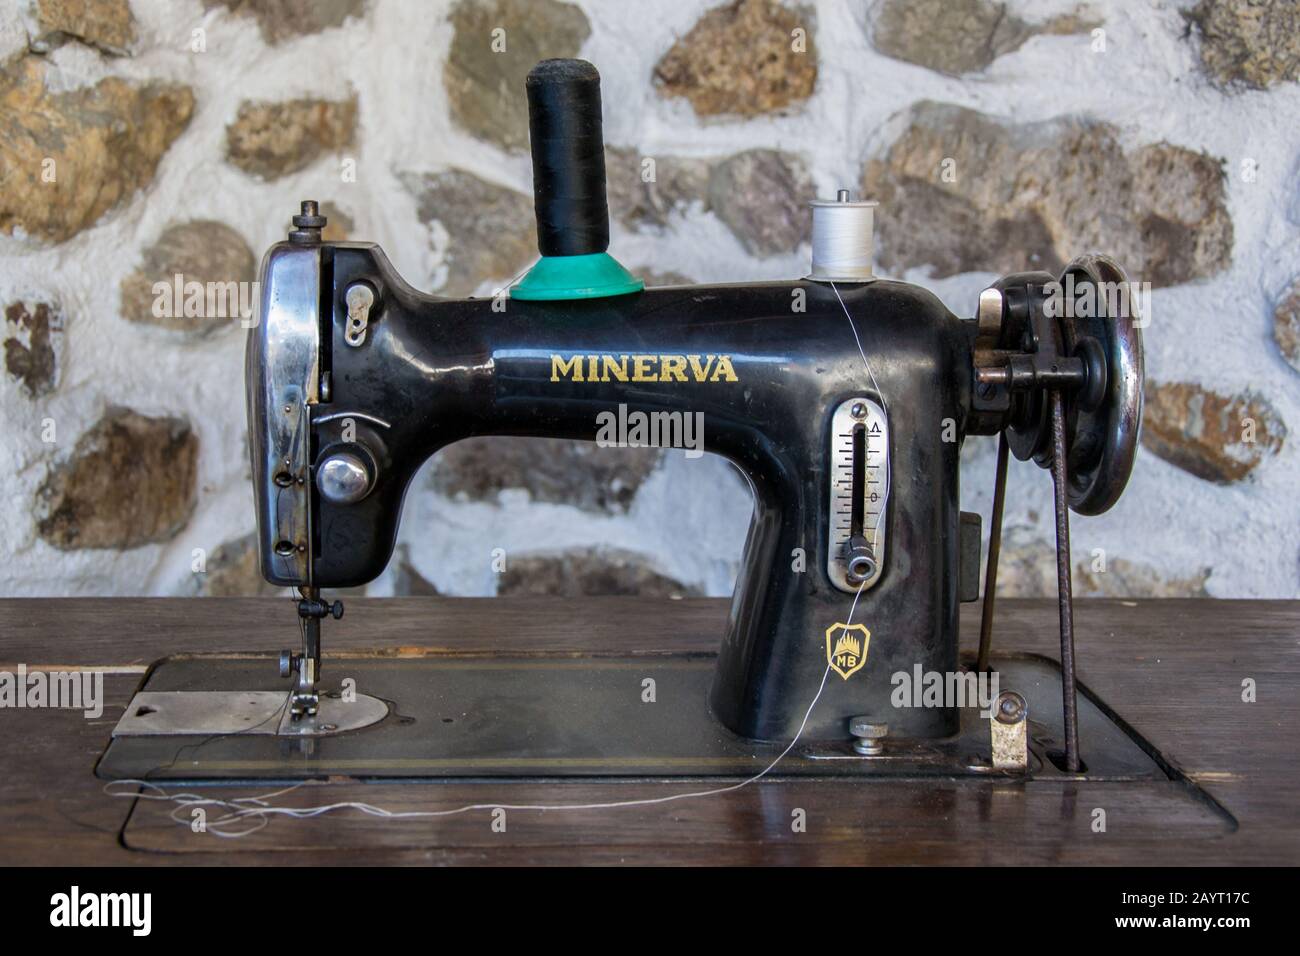 Klassische Nähmaschine, antike Minerva Stockfotografie - Alamy